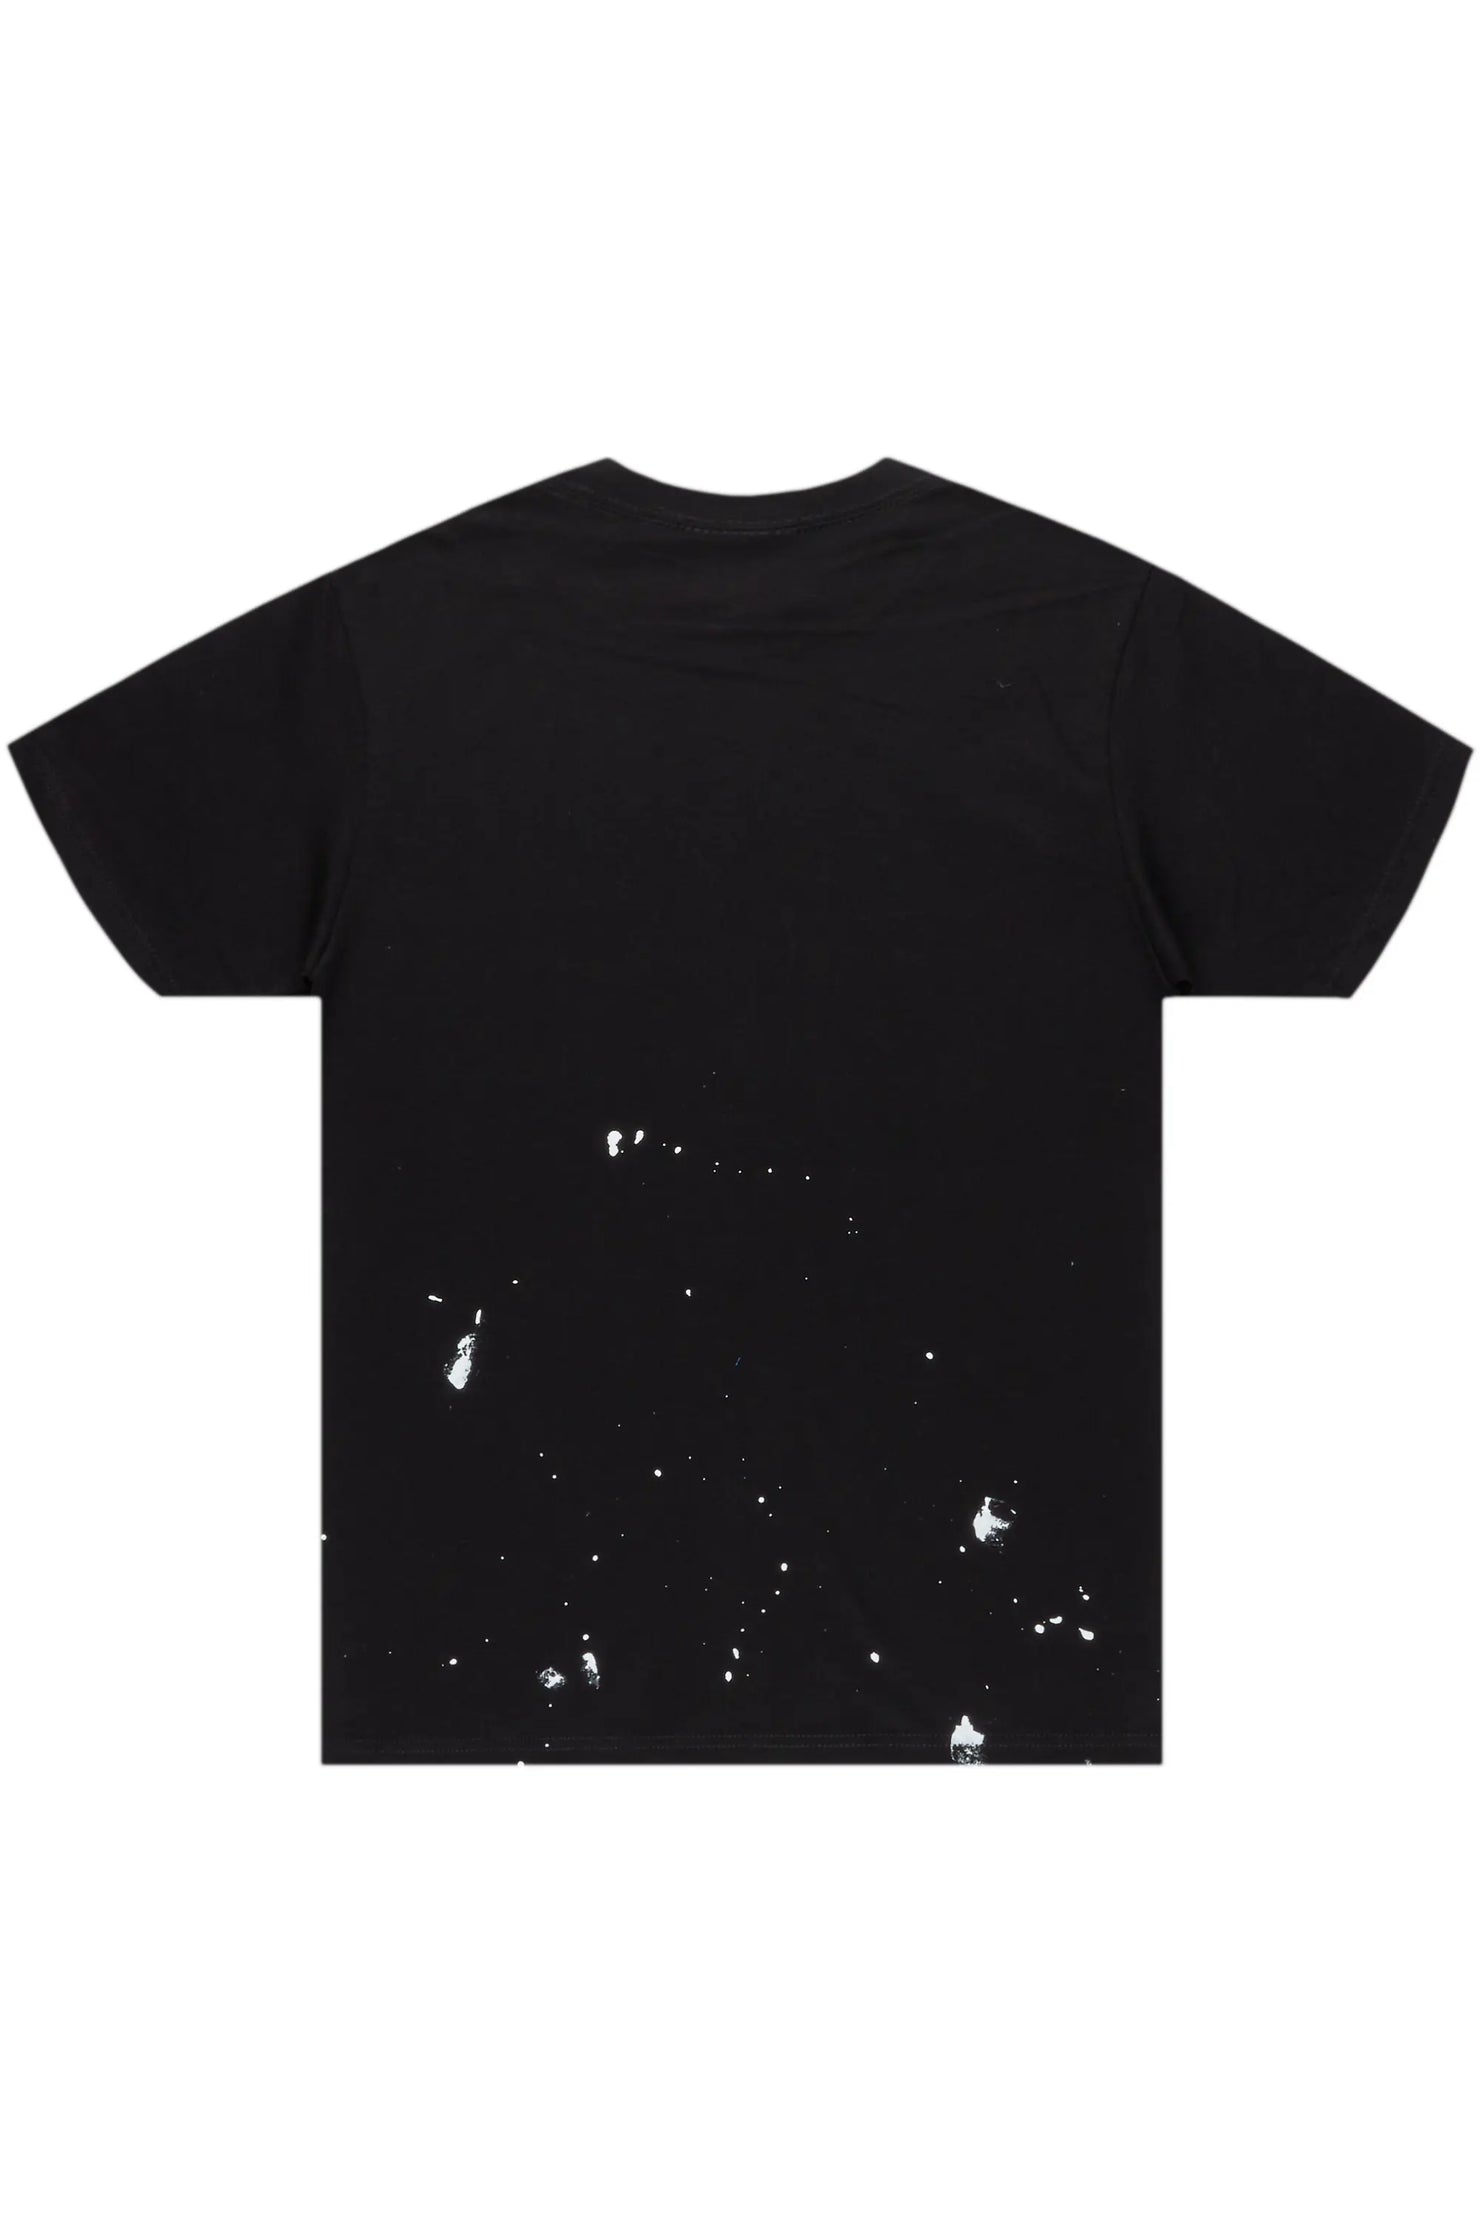 Raffer Black Graphic T-Shirt